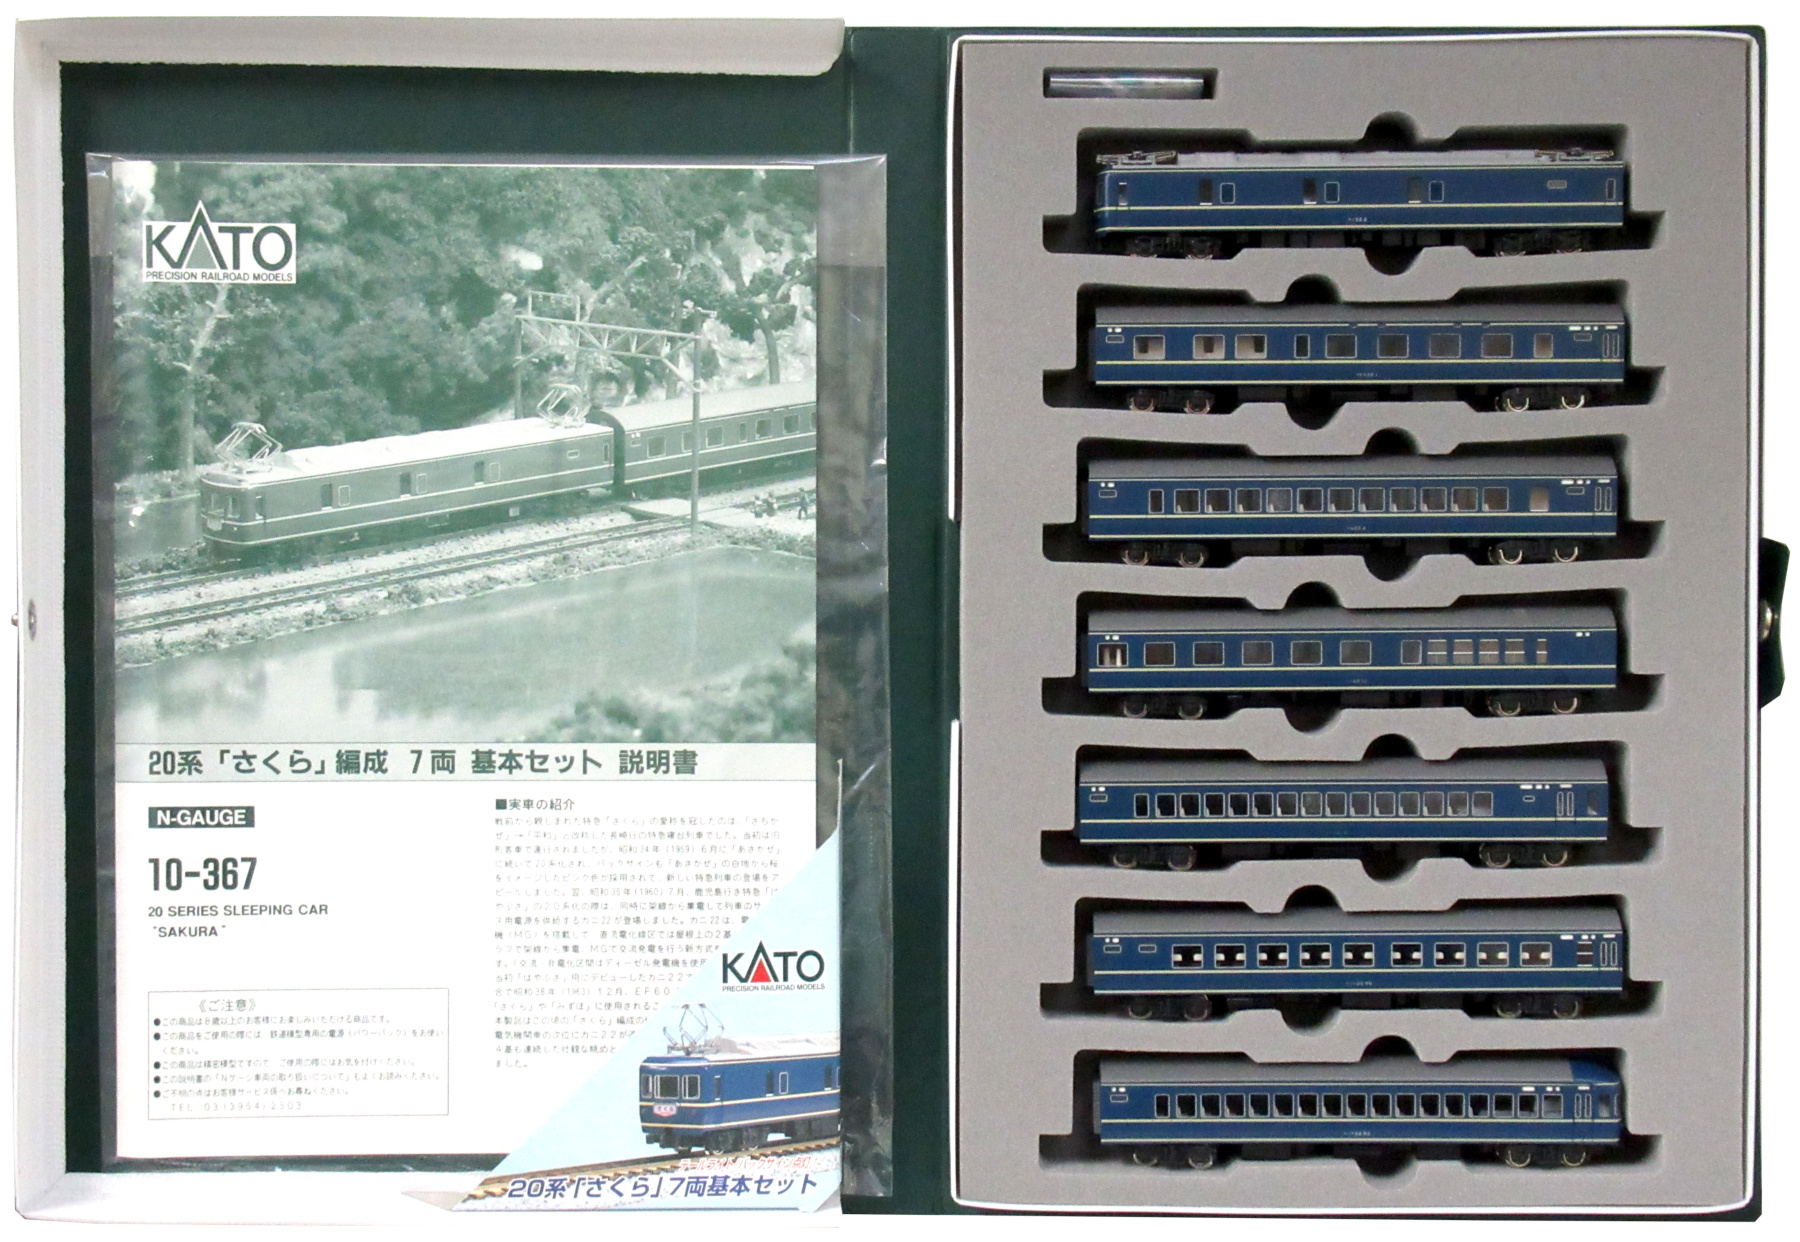 KATO Nゲージ 10-367 20系 さくら 7両基本セット - 鉄道模型